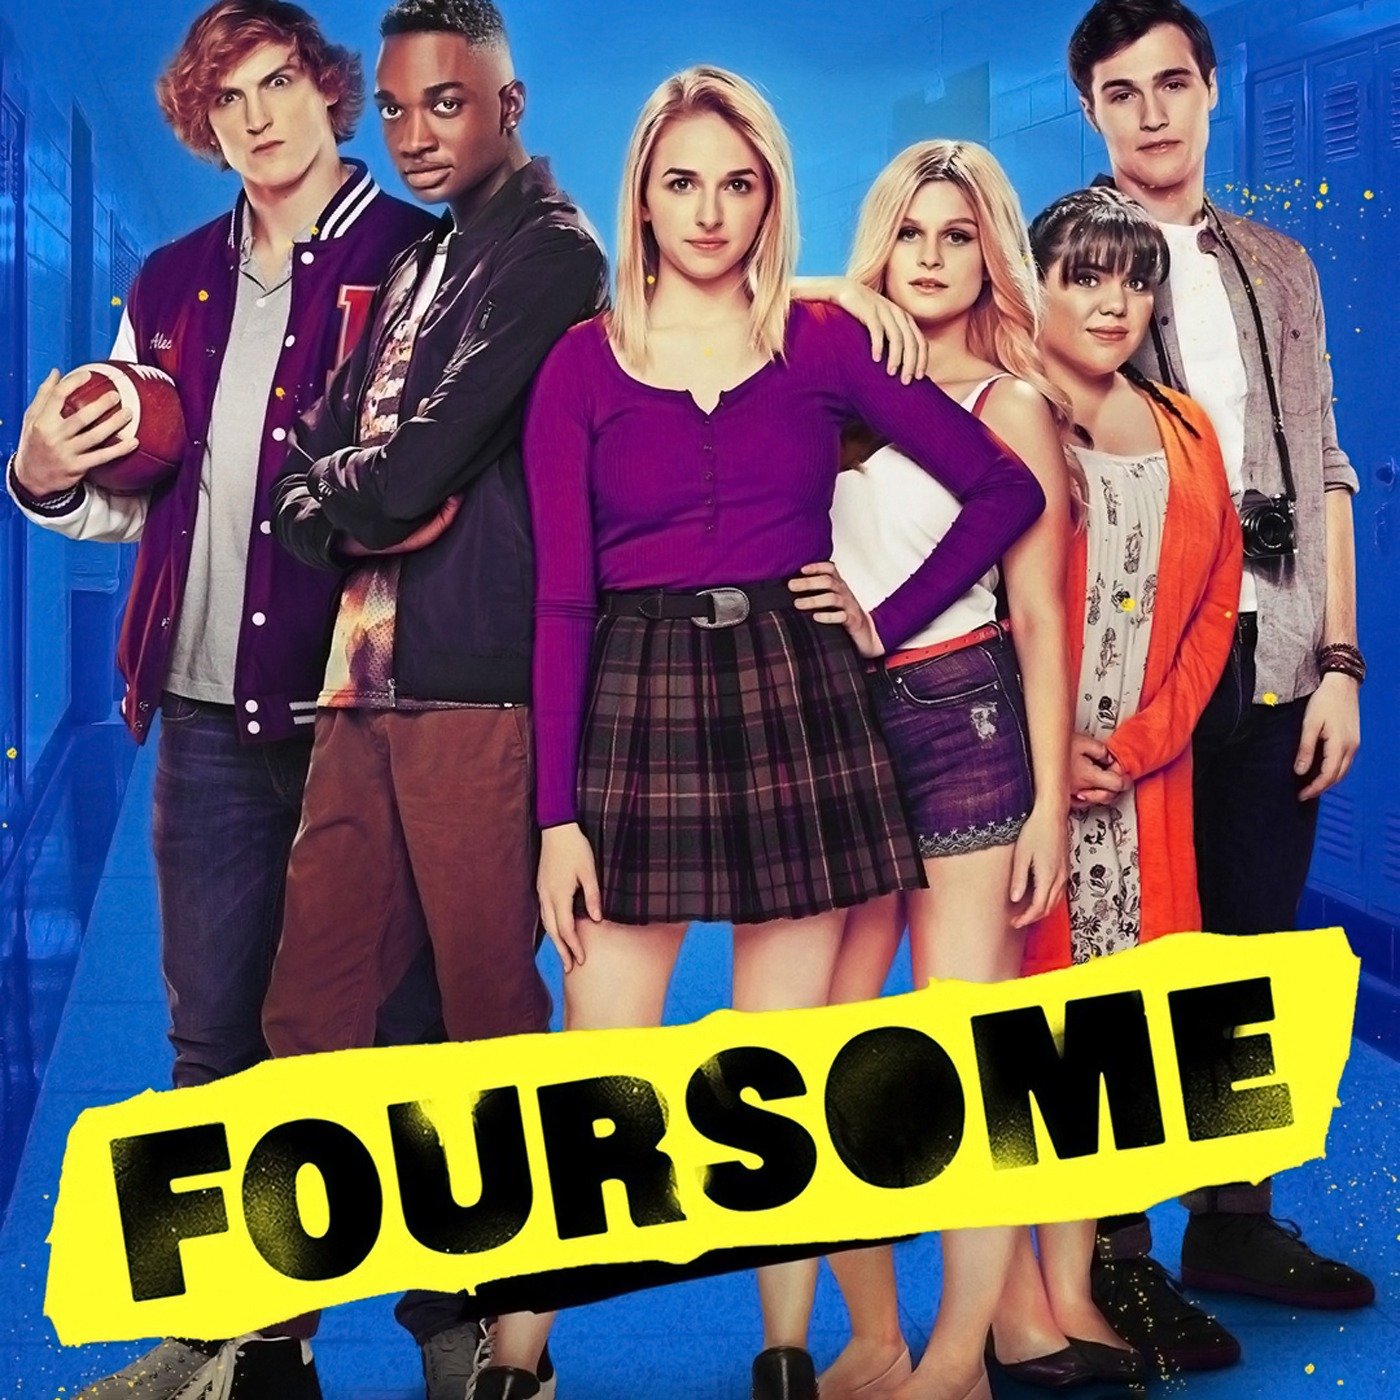 Foursome Awesomenesstv Free Episodes shawn wolfe